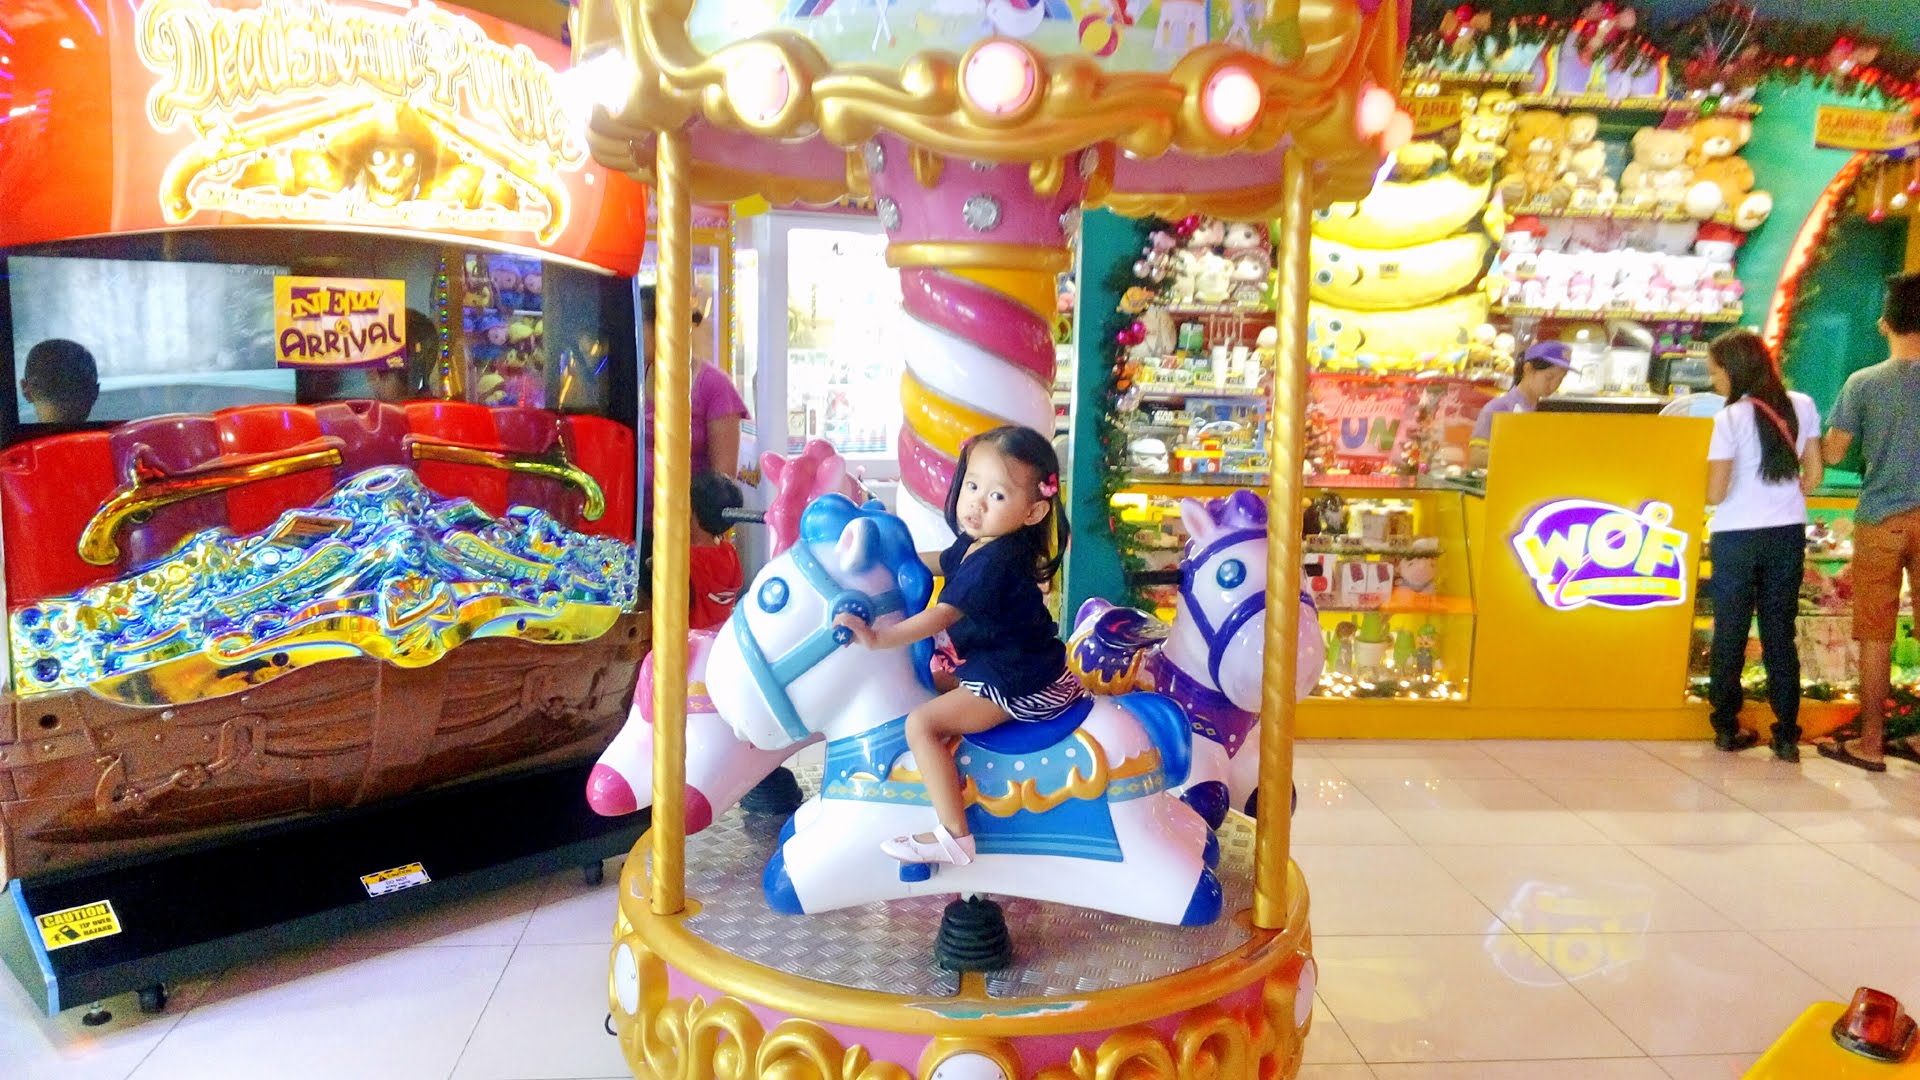 Indoor Amusement Arcade Playground for Children - Carousel Pony Ride ...